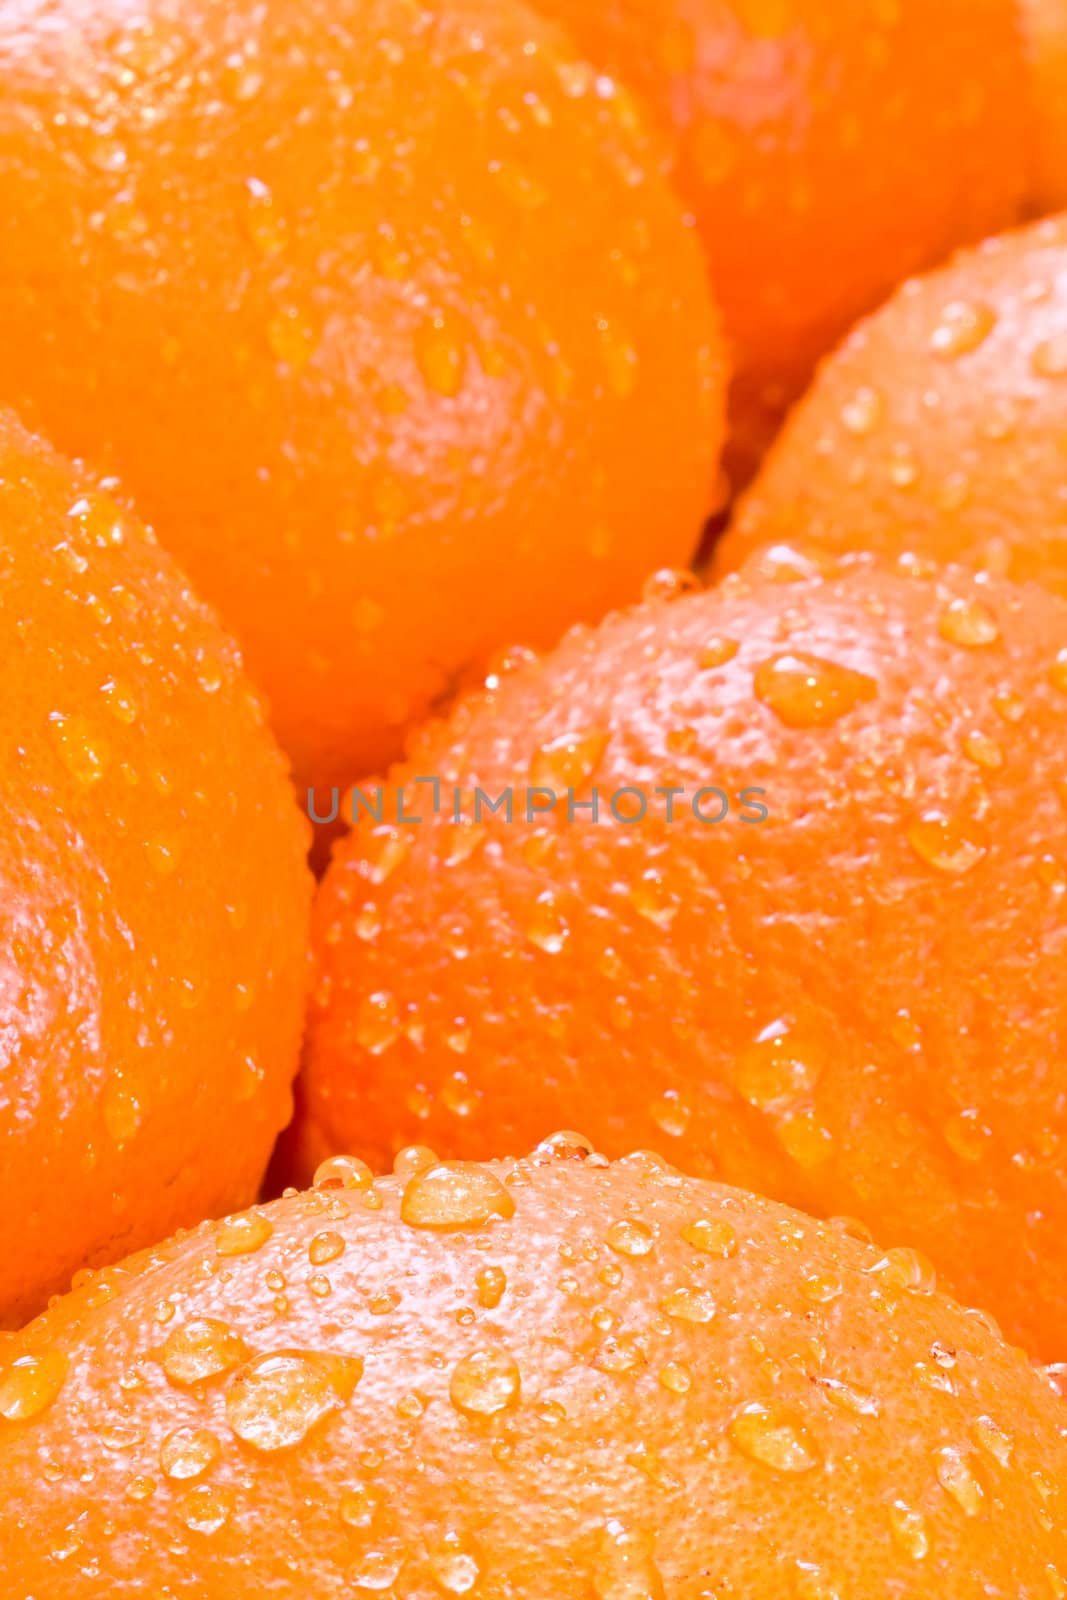 bunch of fresh oranges shot close up